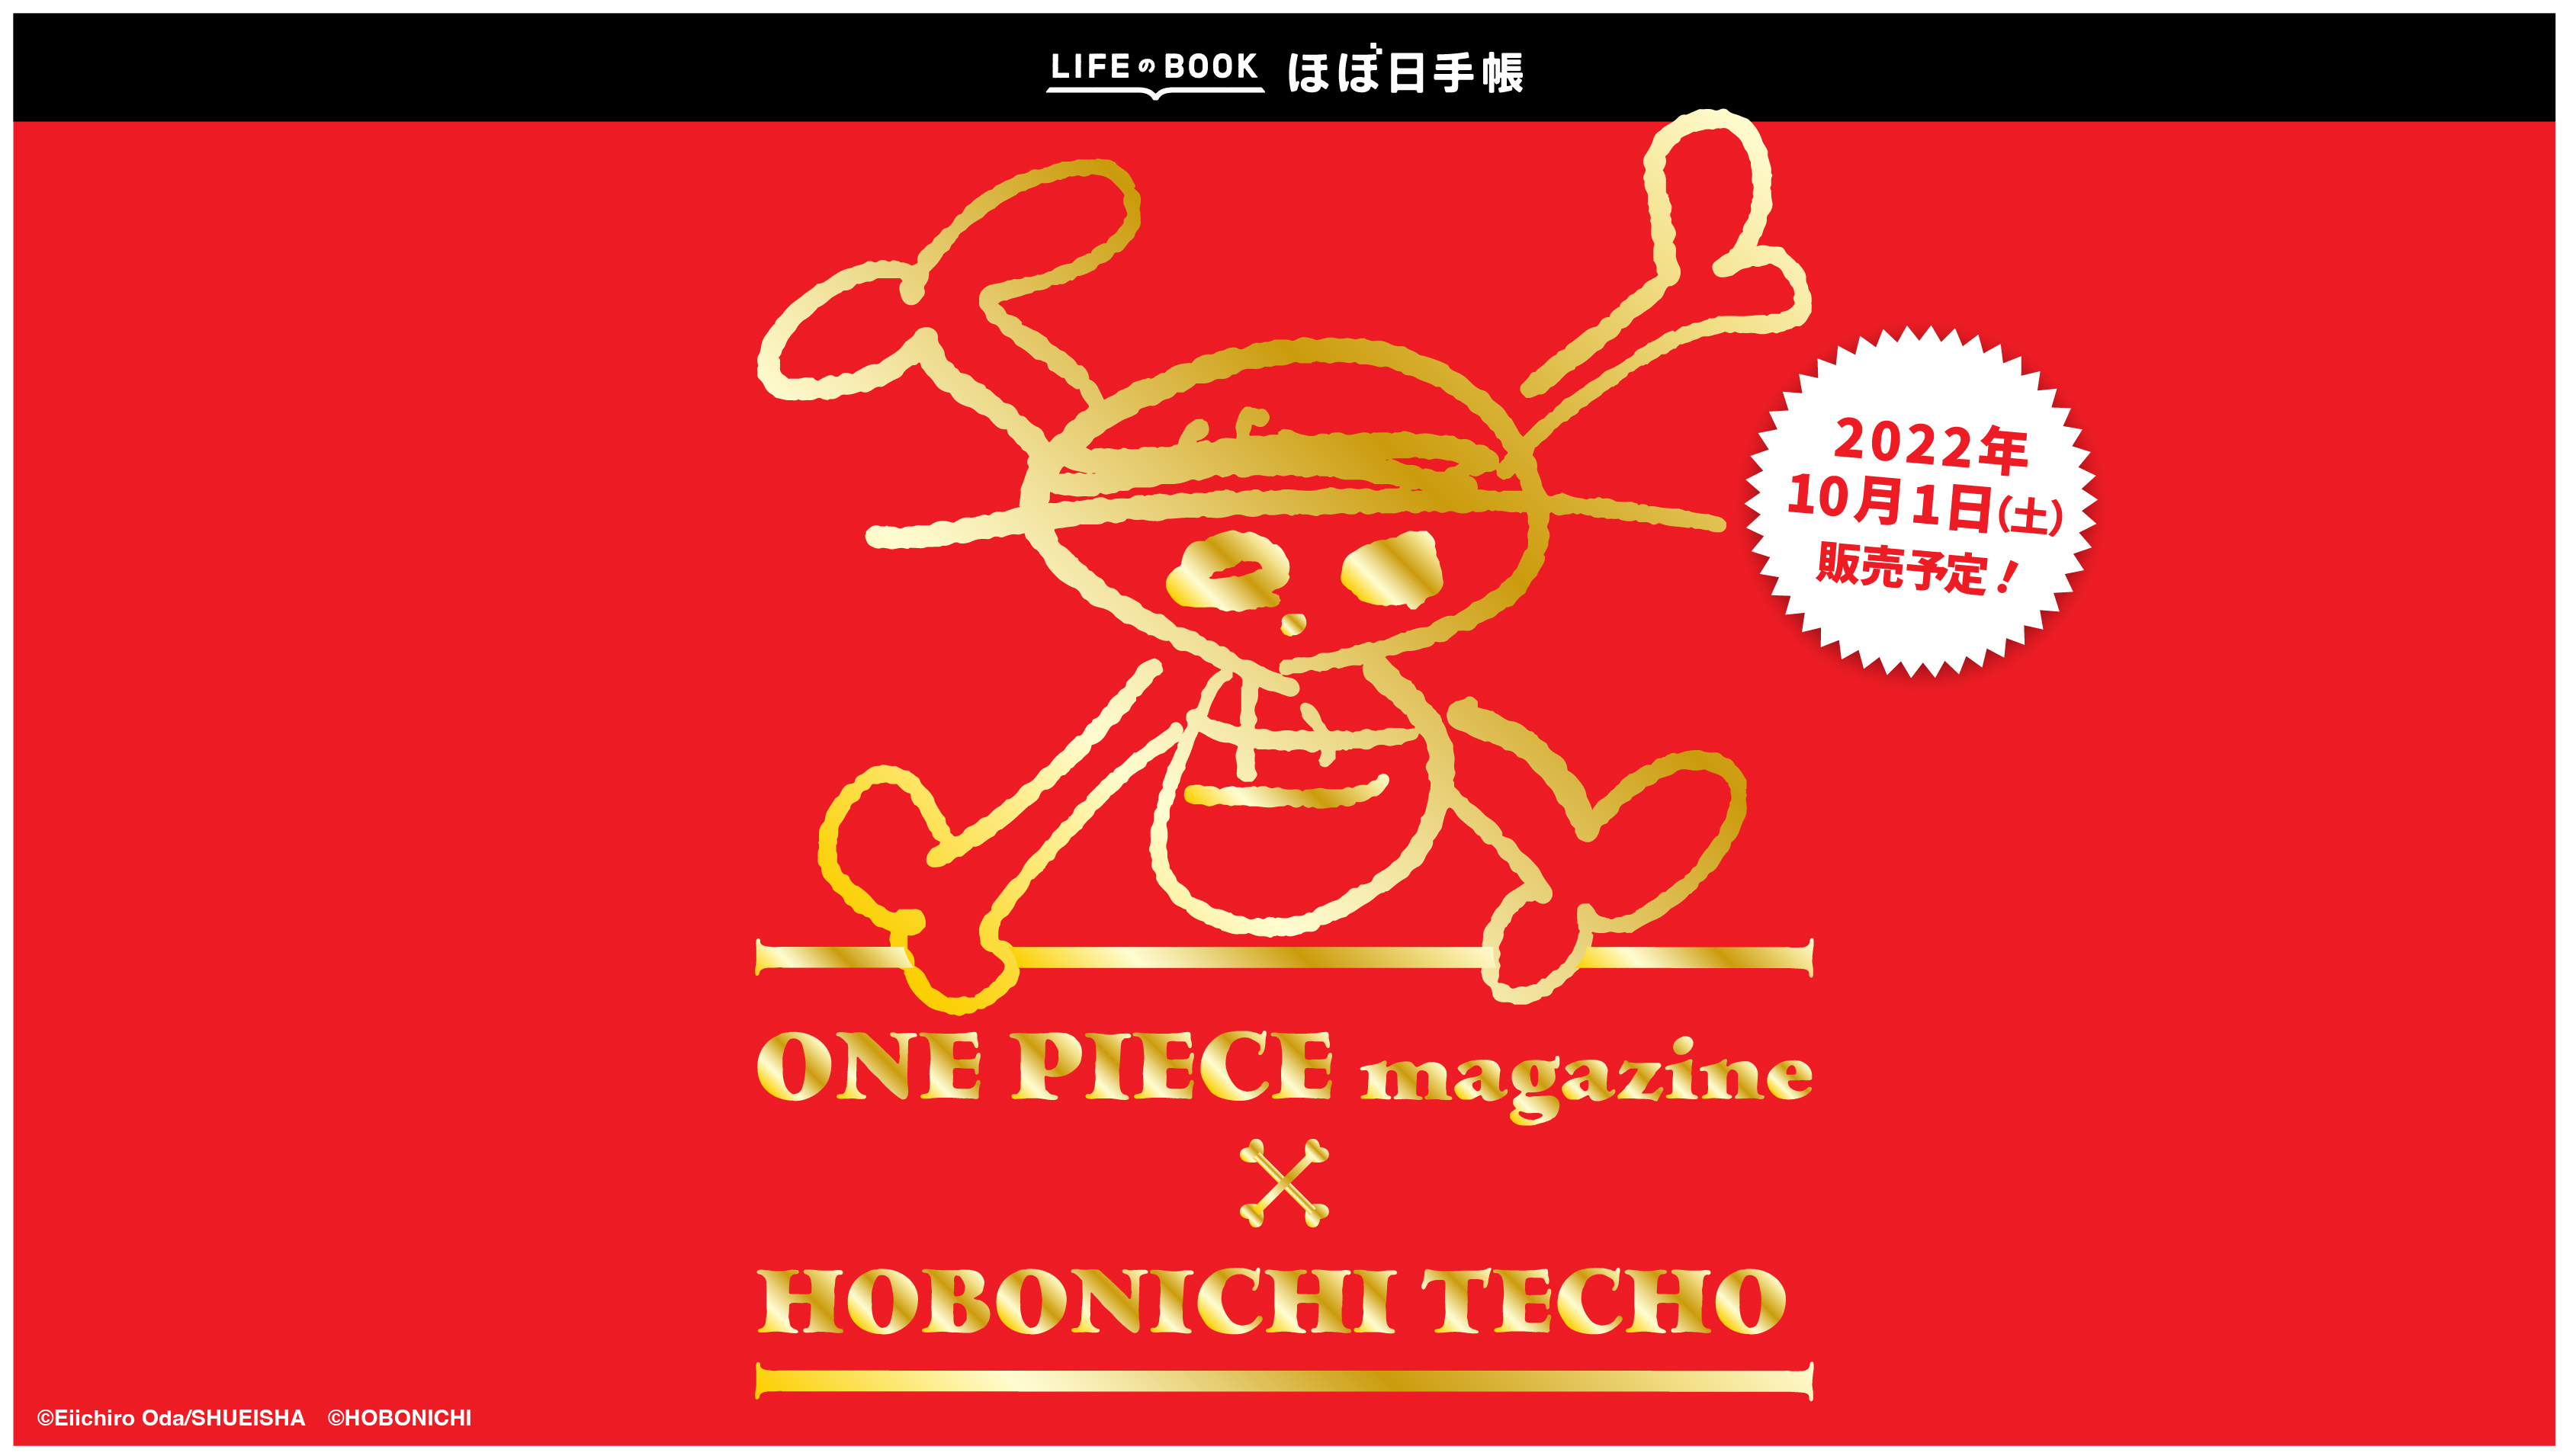 『ONE PIECE magazine』×『ほぼ日手帳2023』